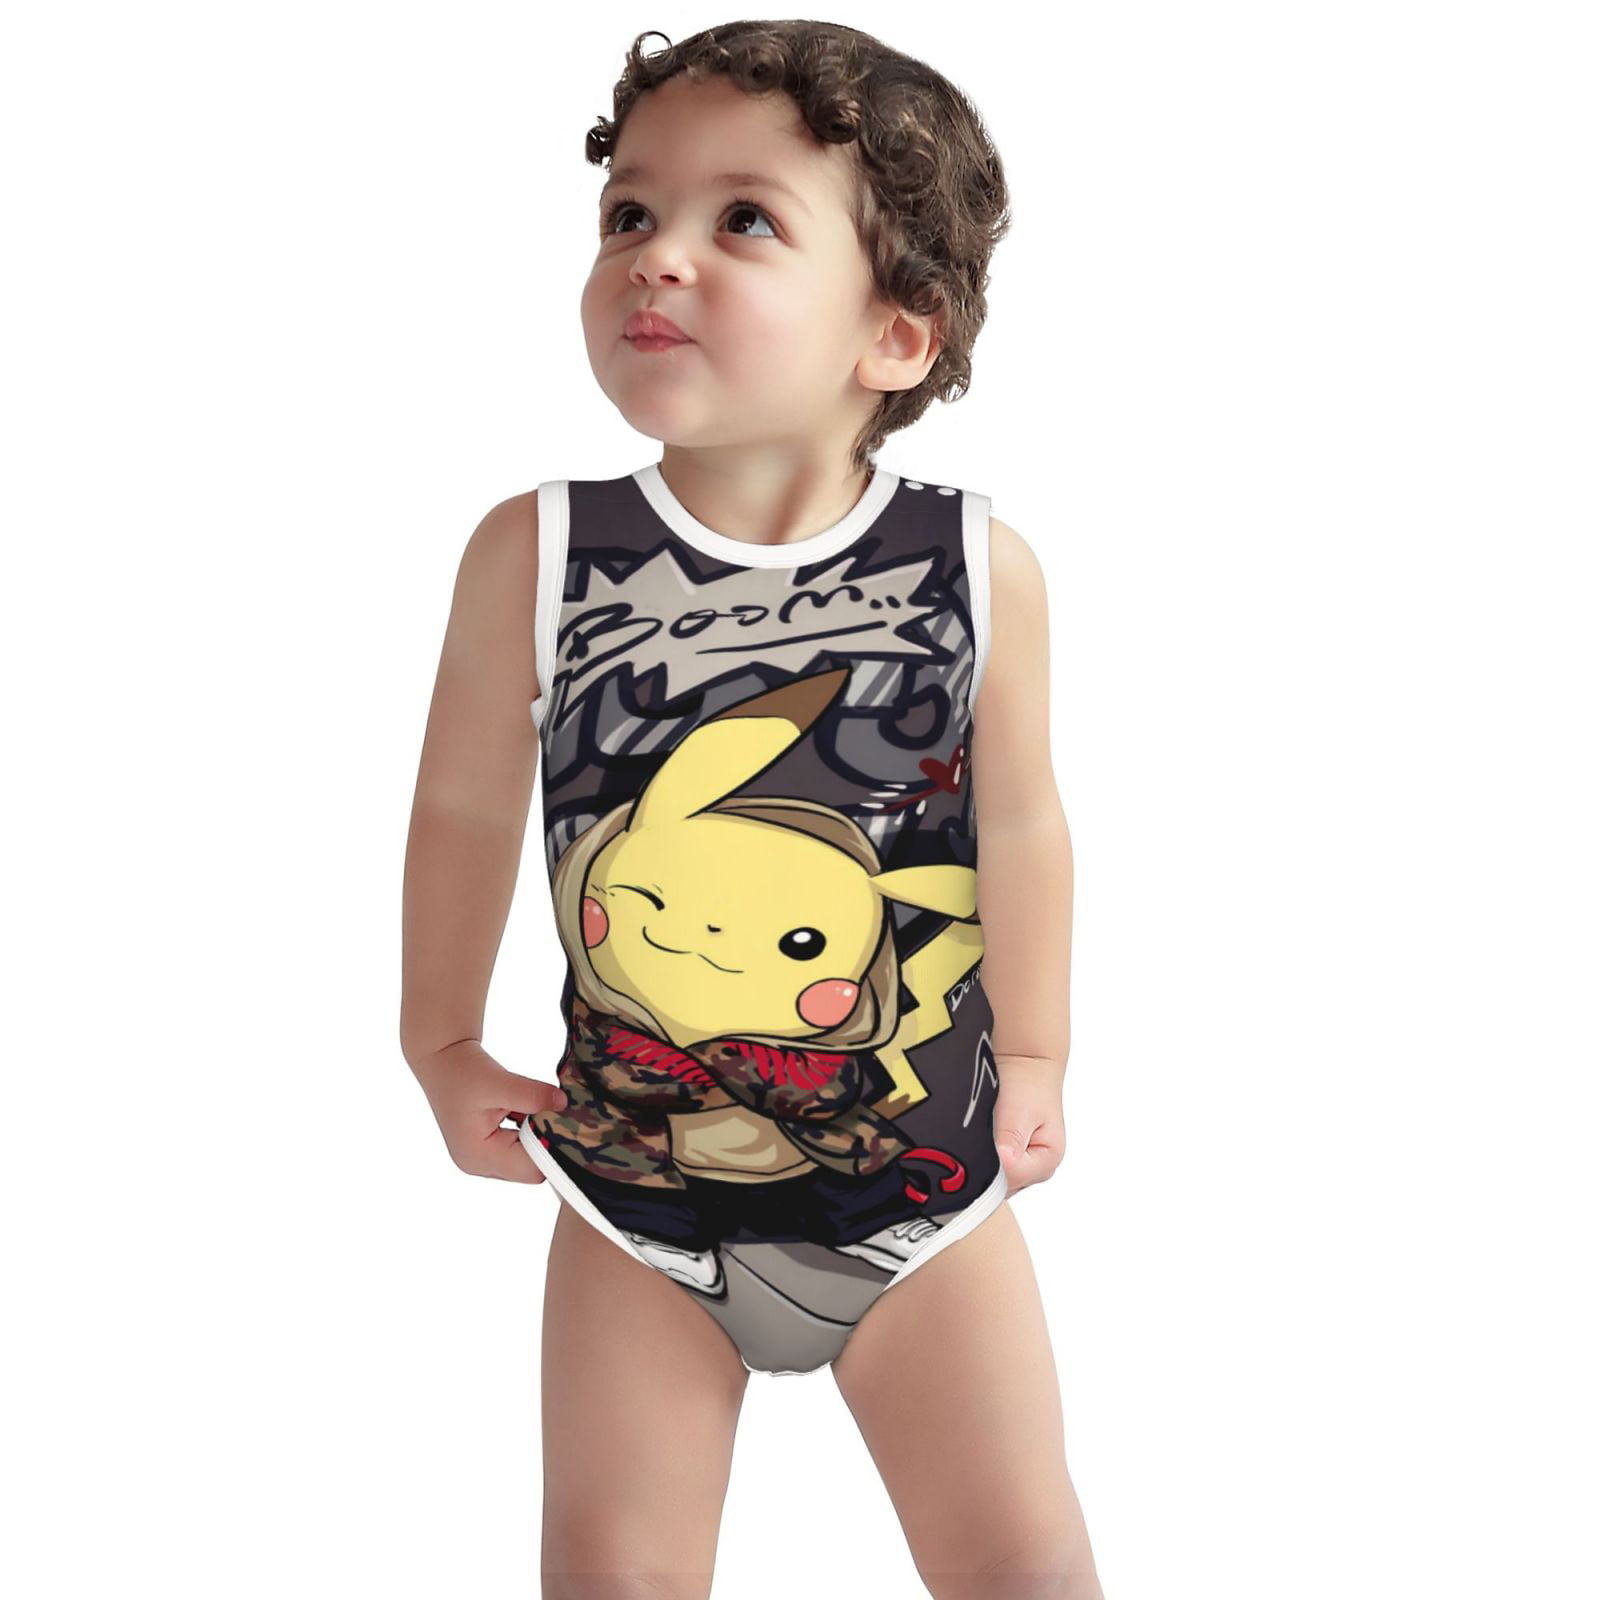 Stitch and Pikachu Newborn Jumpsuit Baby Bodysuit Long Sleeve Romper Clothes Set 